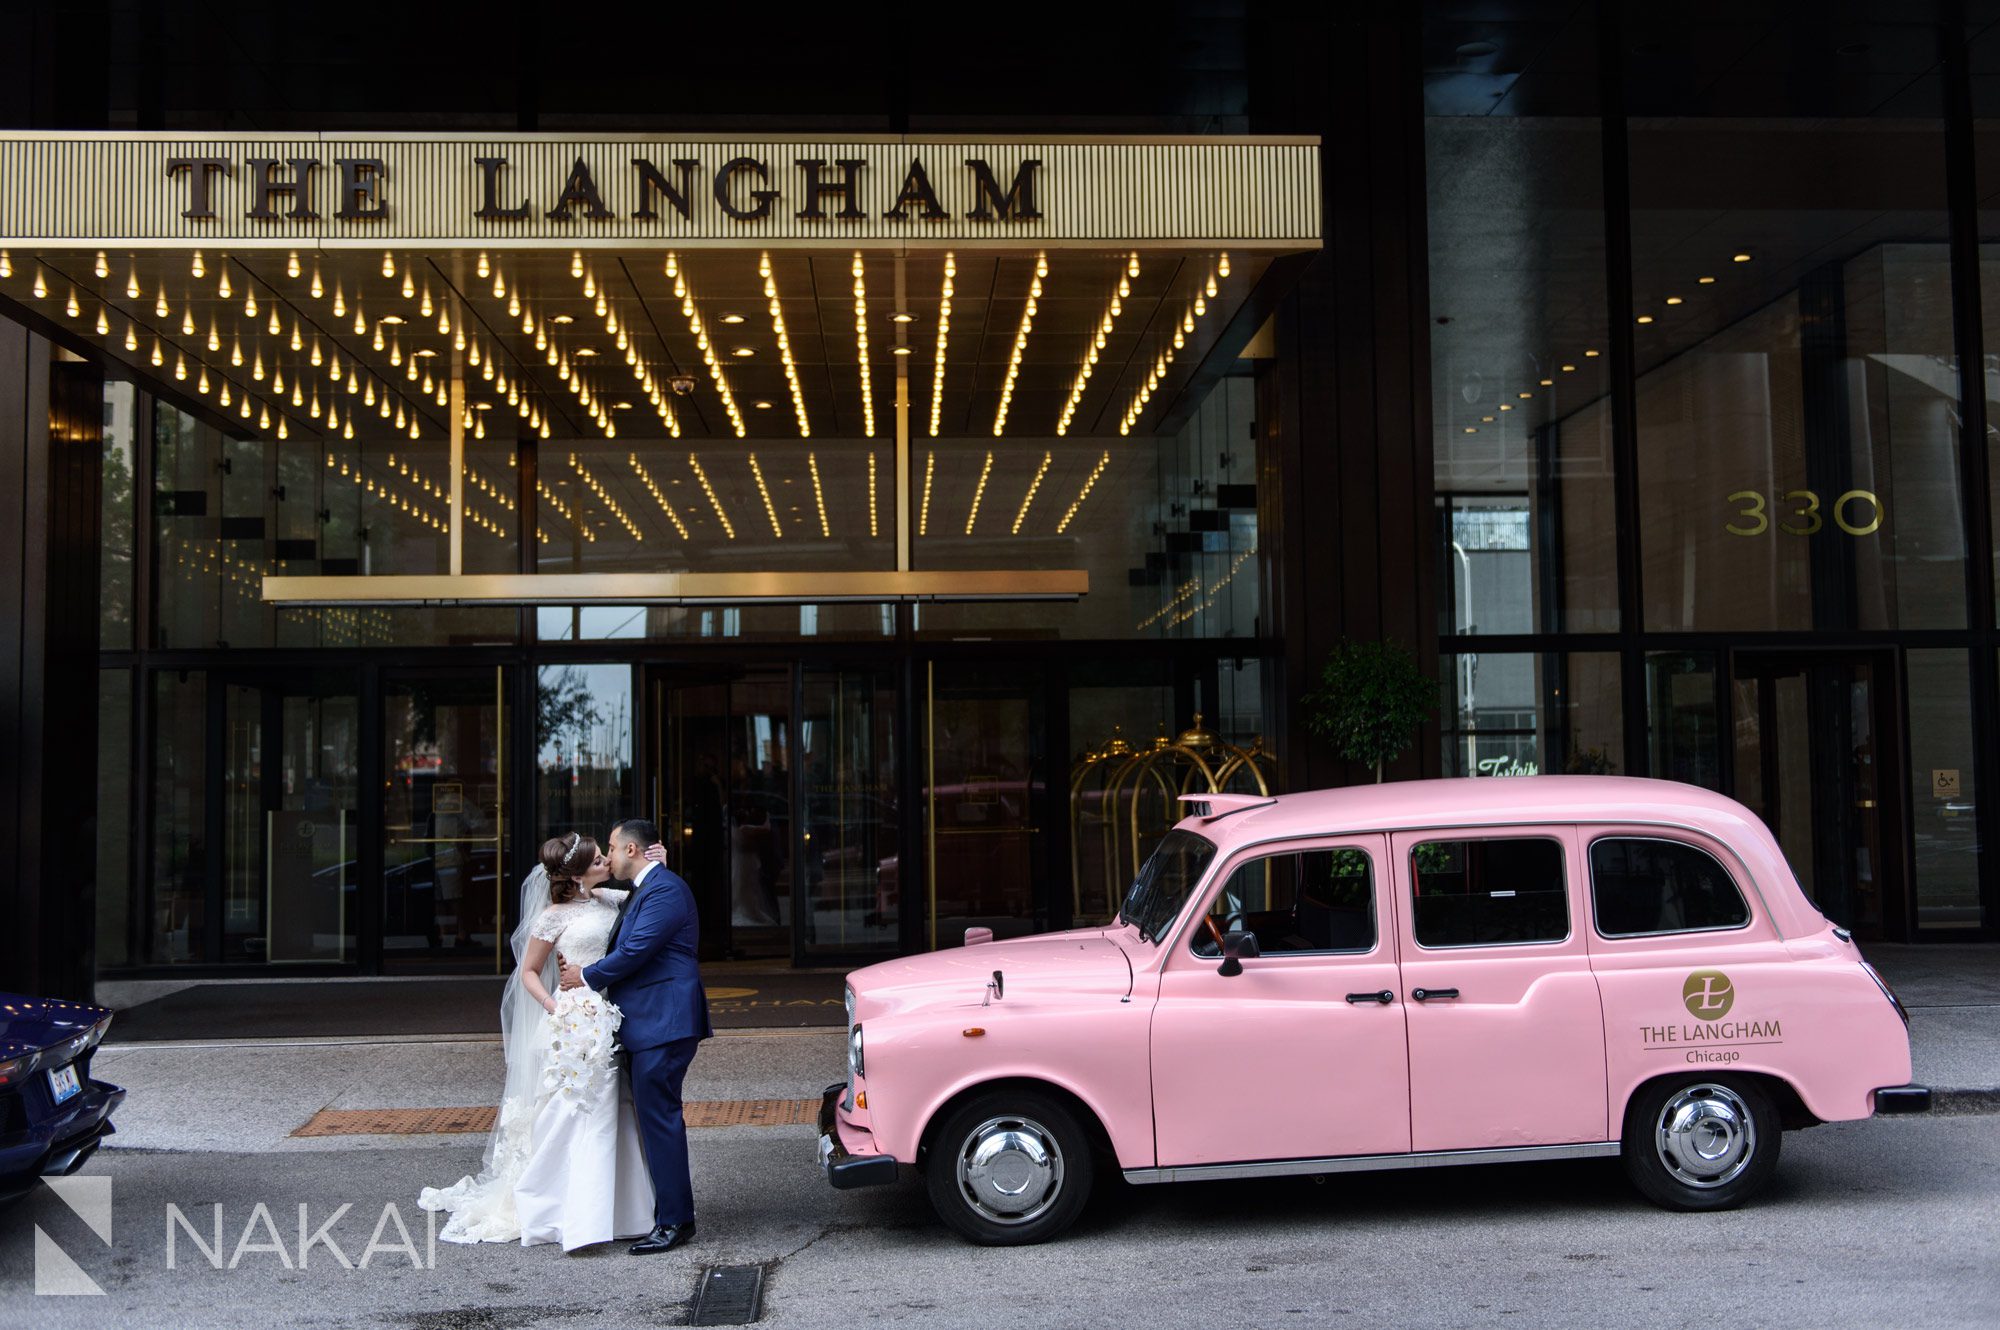 Langham Chicago wedding photos kesh events